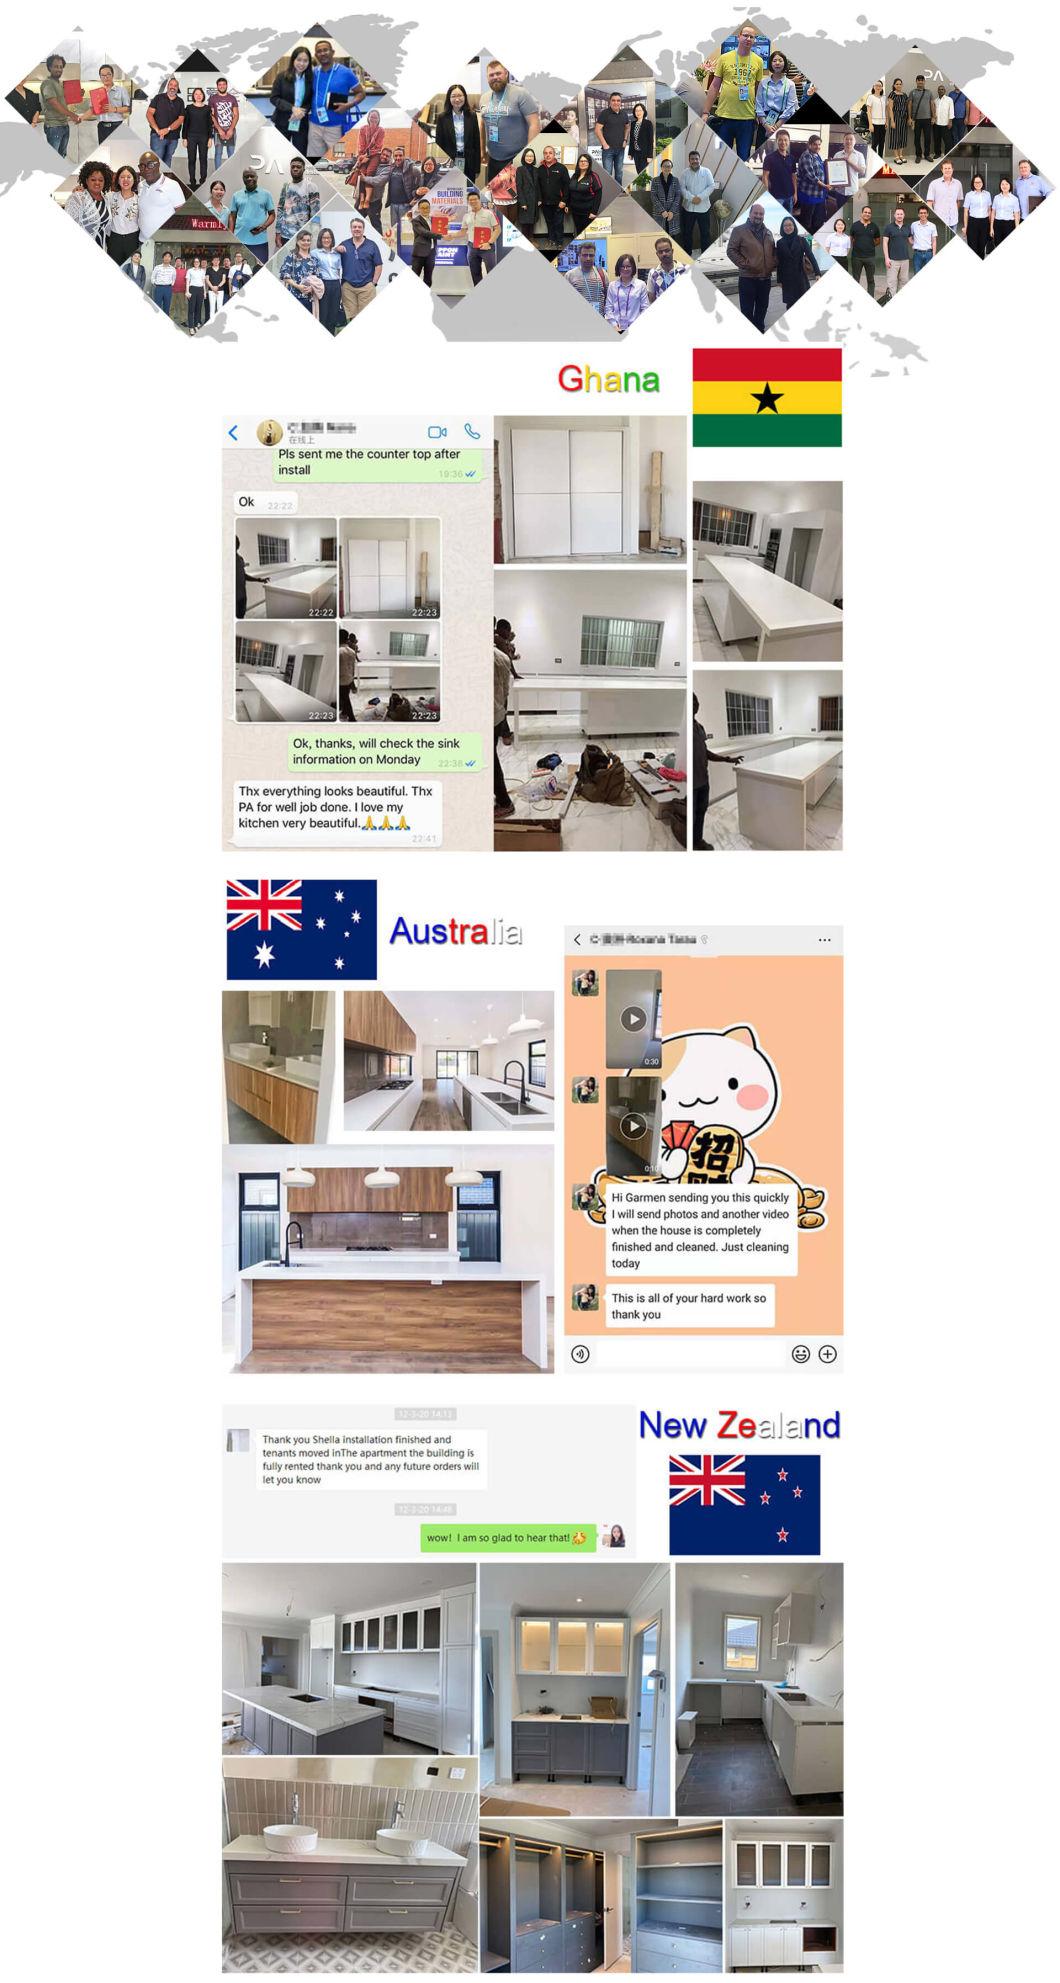 PA Australia Style Furniture White Glossy Lacquer Modern Kitchen Cabinets